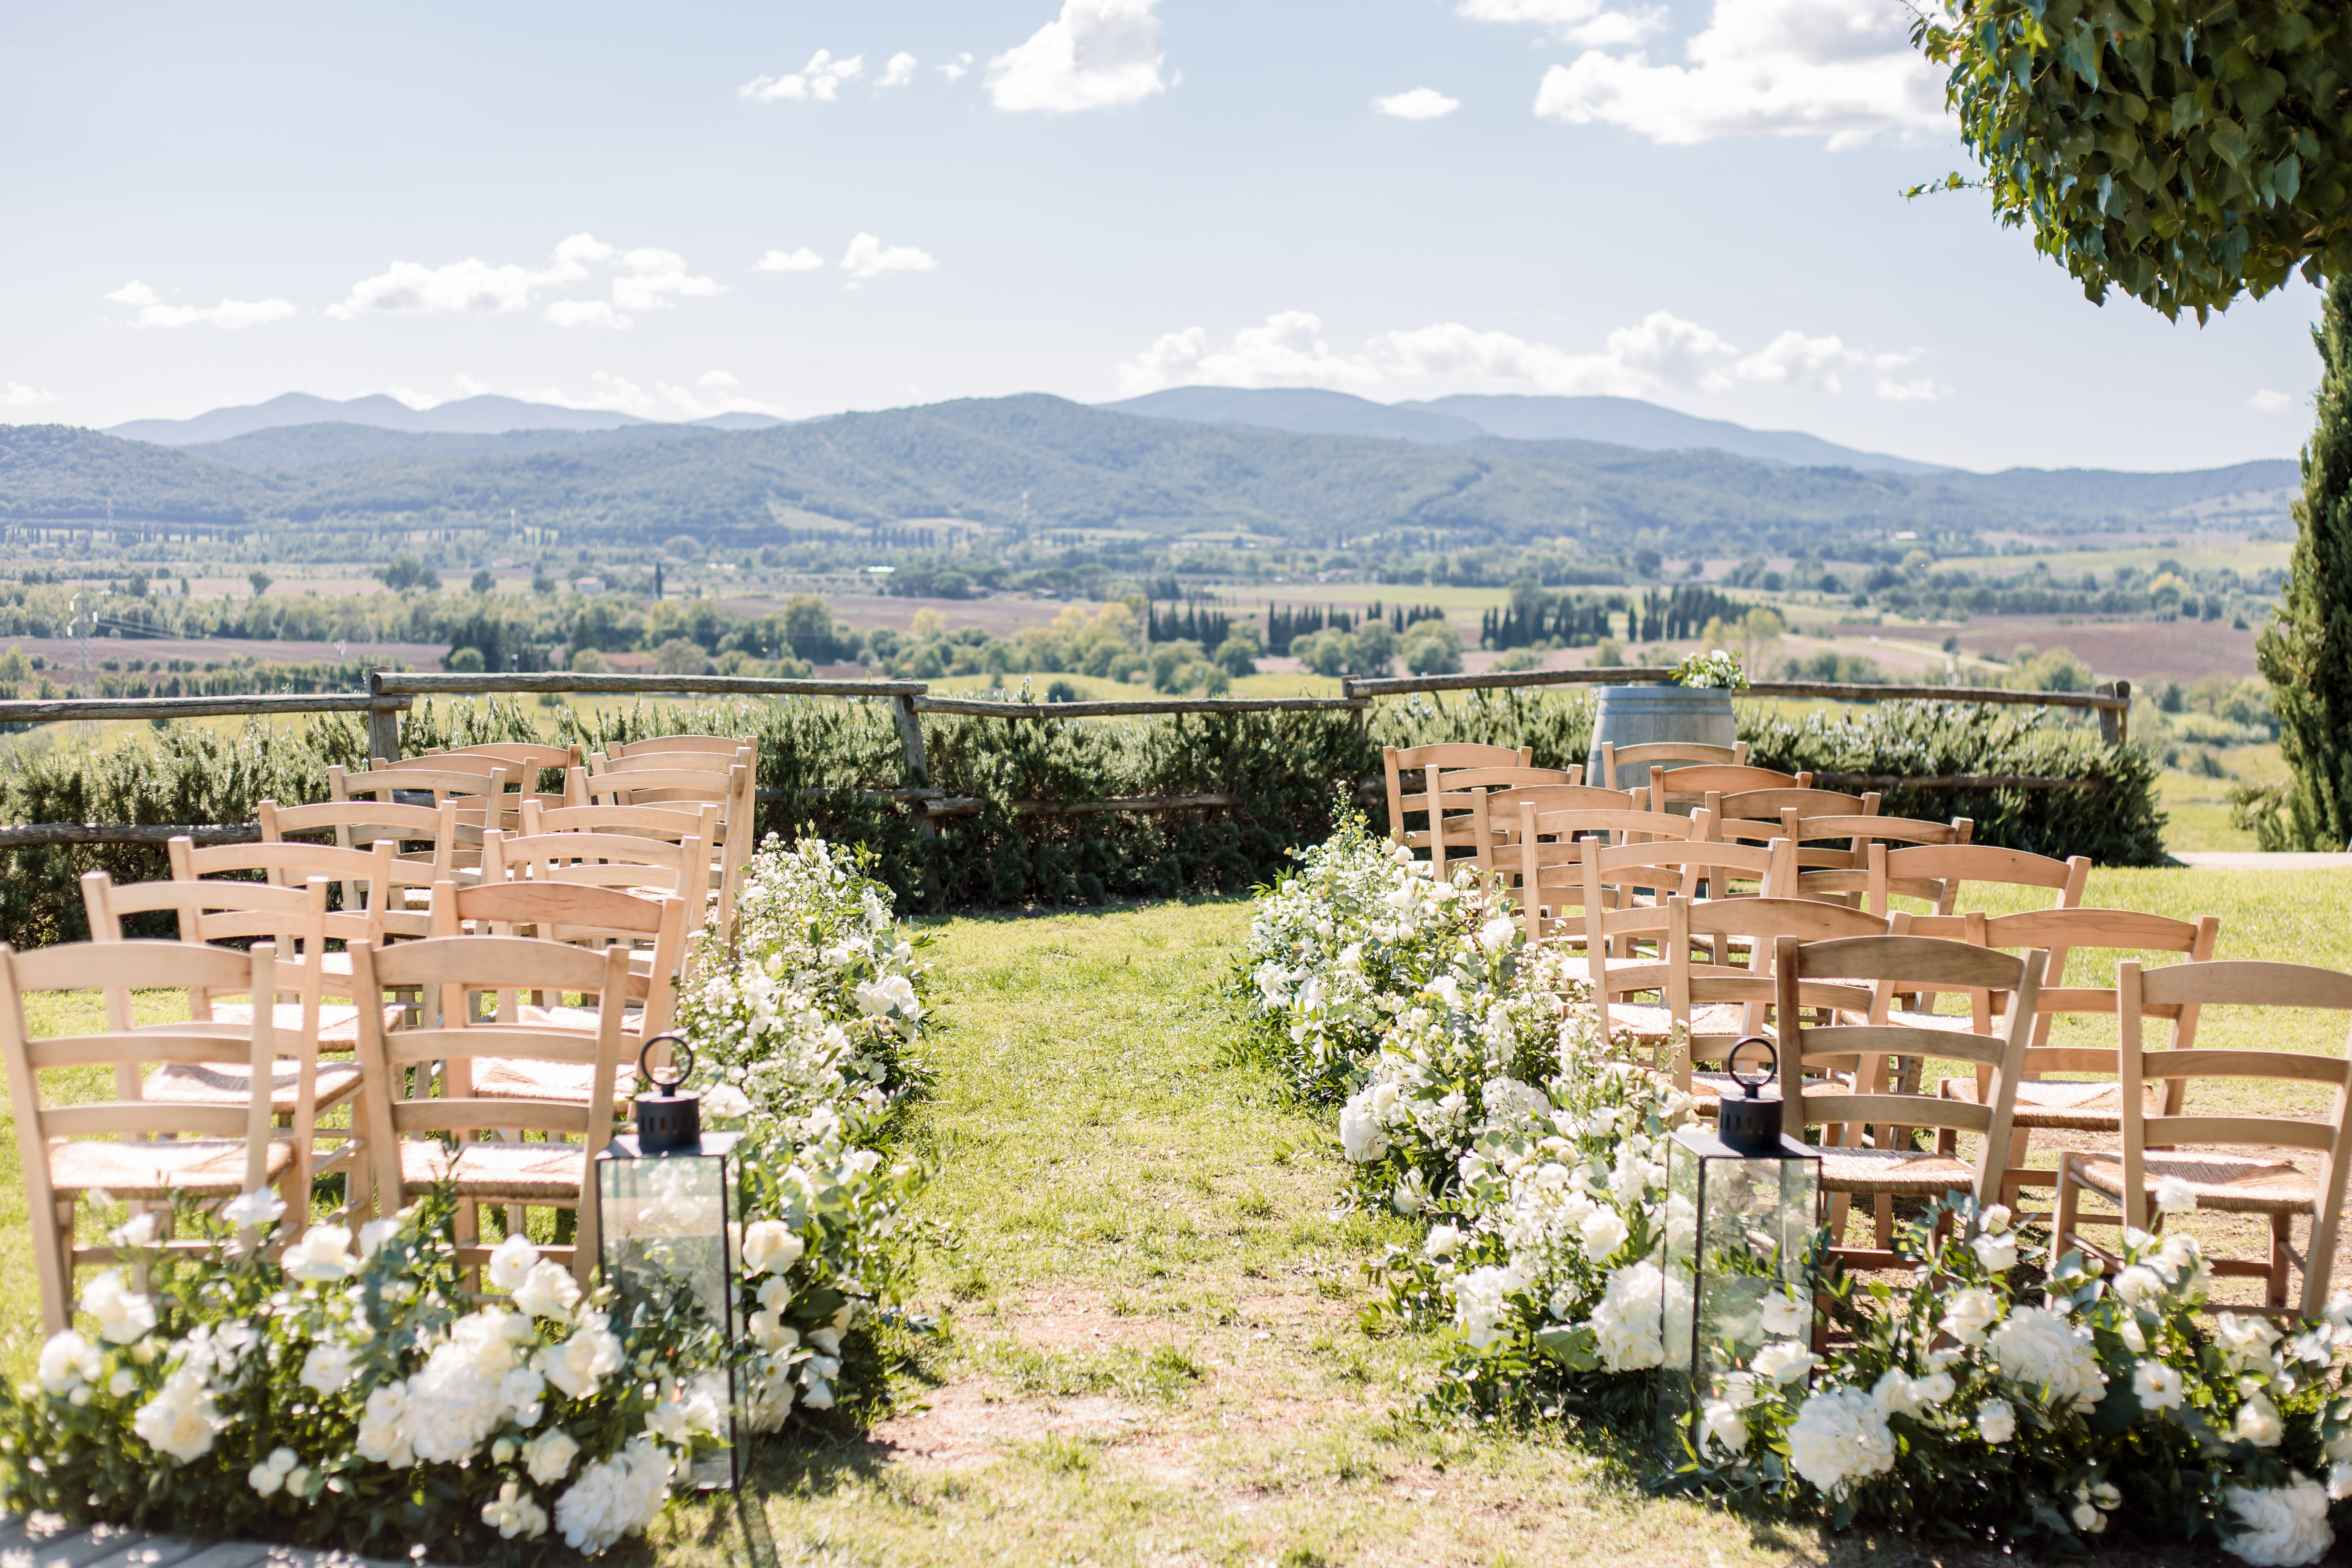 wedding in tuscany